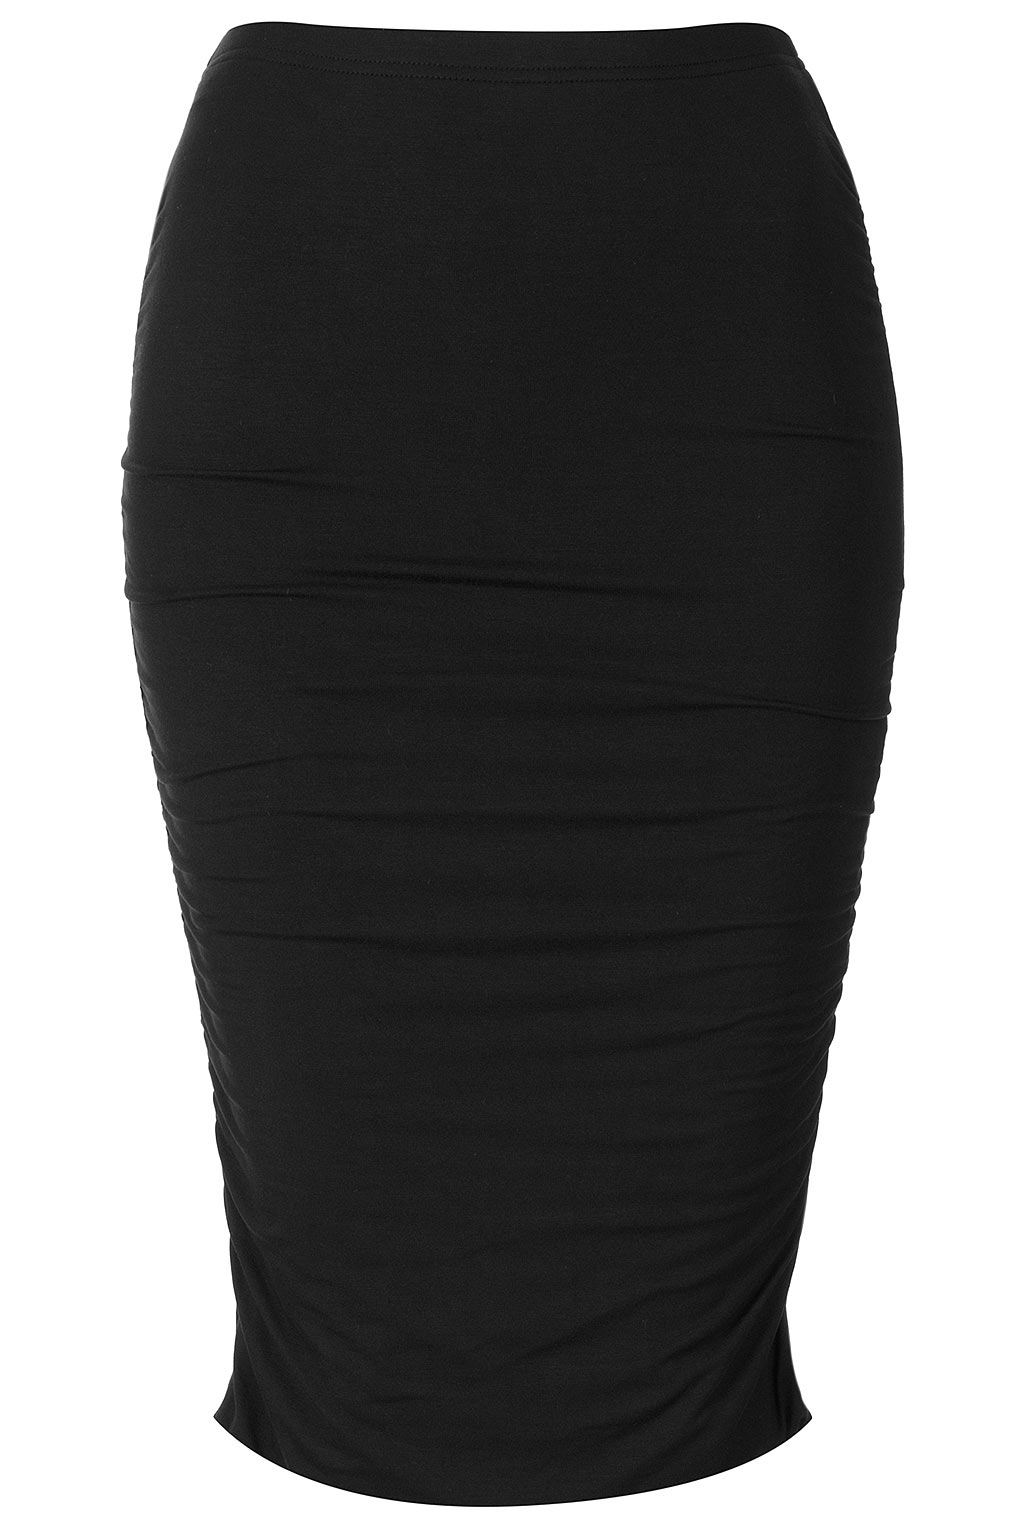 Lyst - Topshop Black Ruched Side Tube Skirt in Black